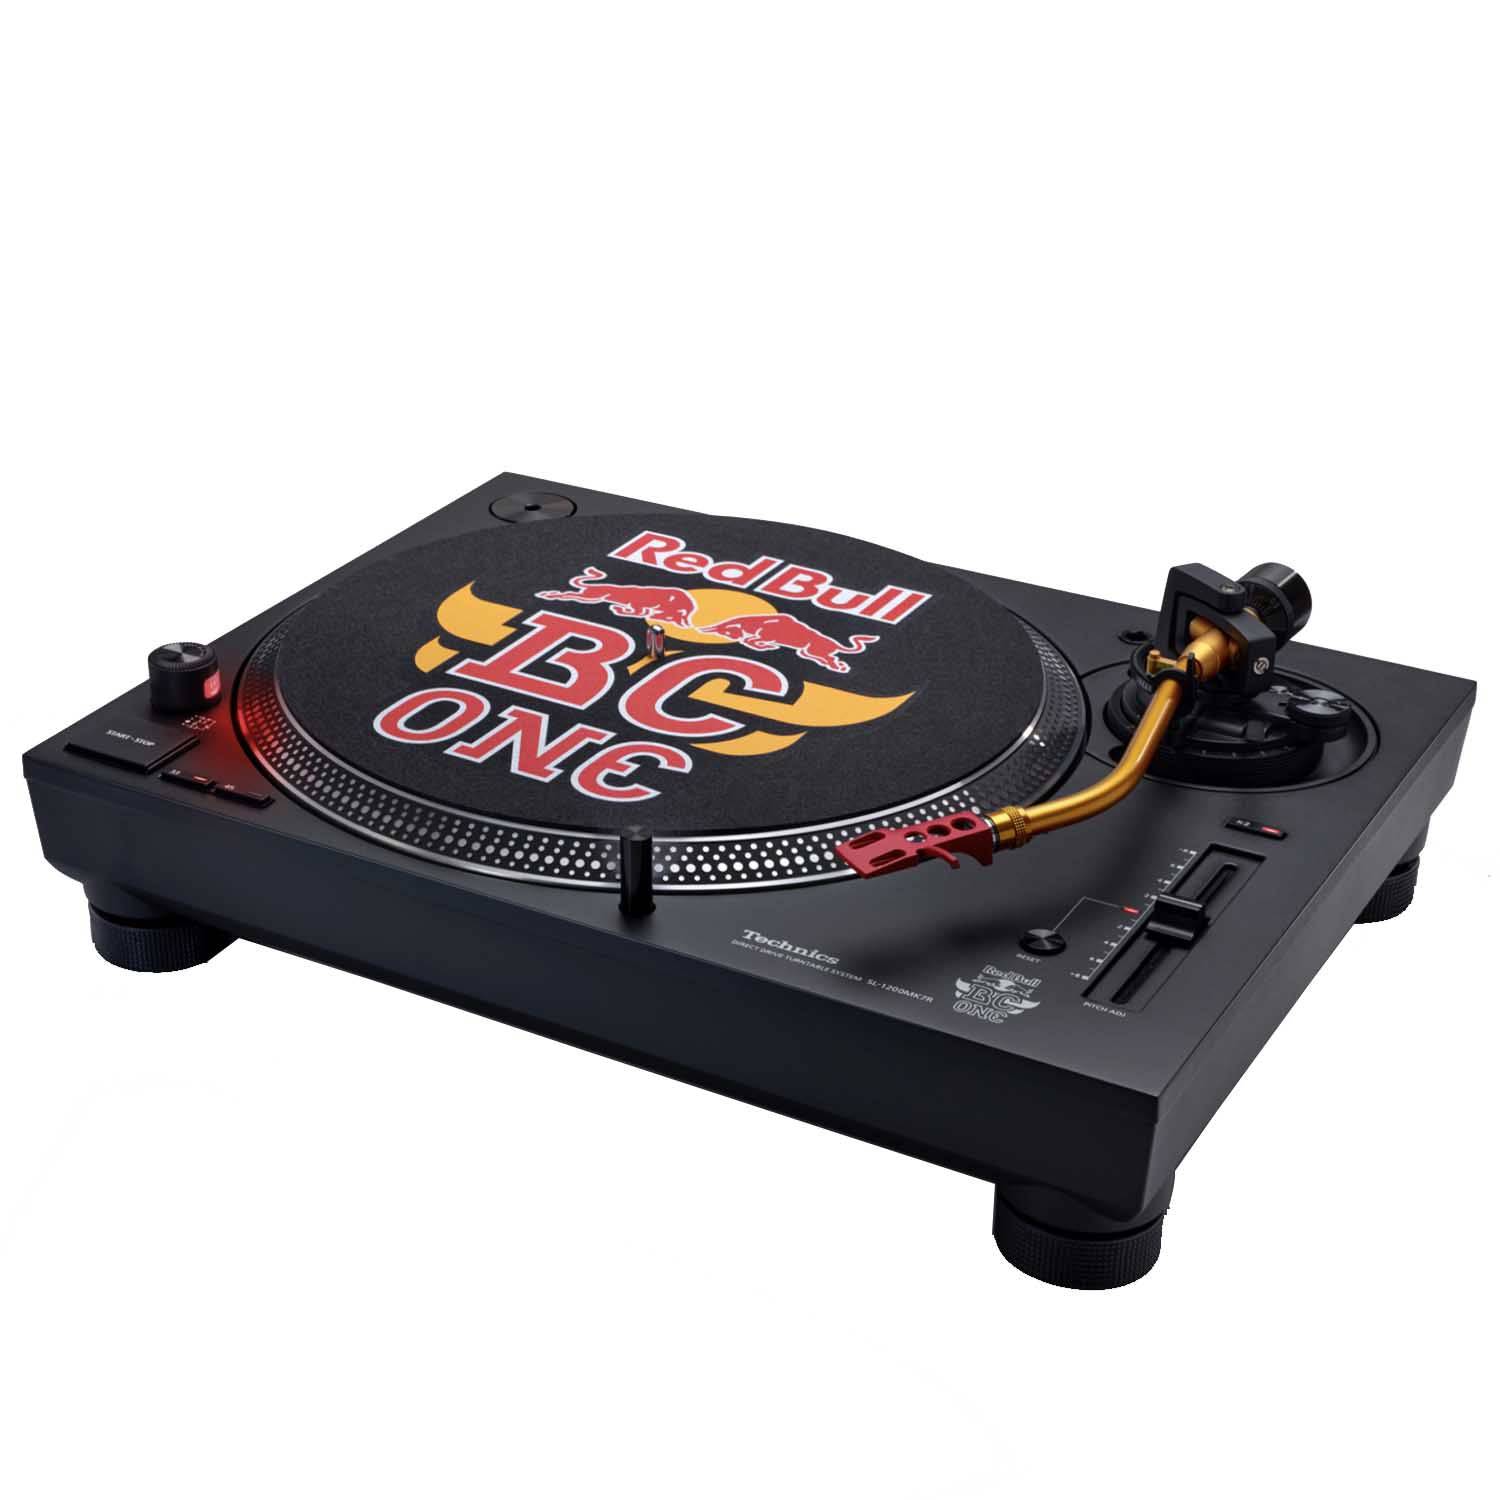 Technics SL-1200MK7R, Red Bull BC ONE Limited Edition Professional DJ Turntable - Hollywood DJ